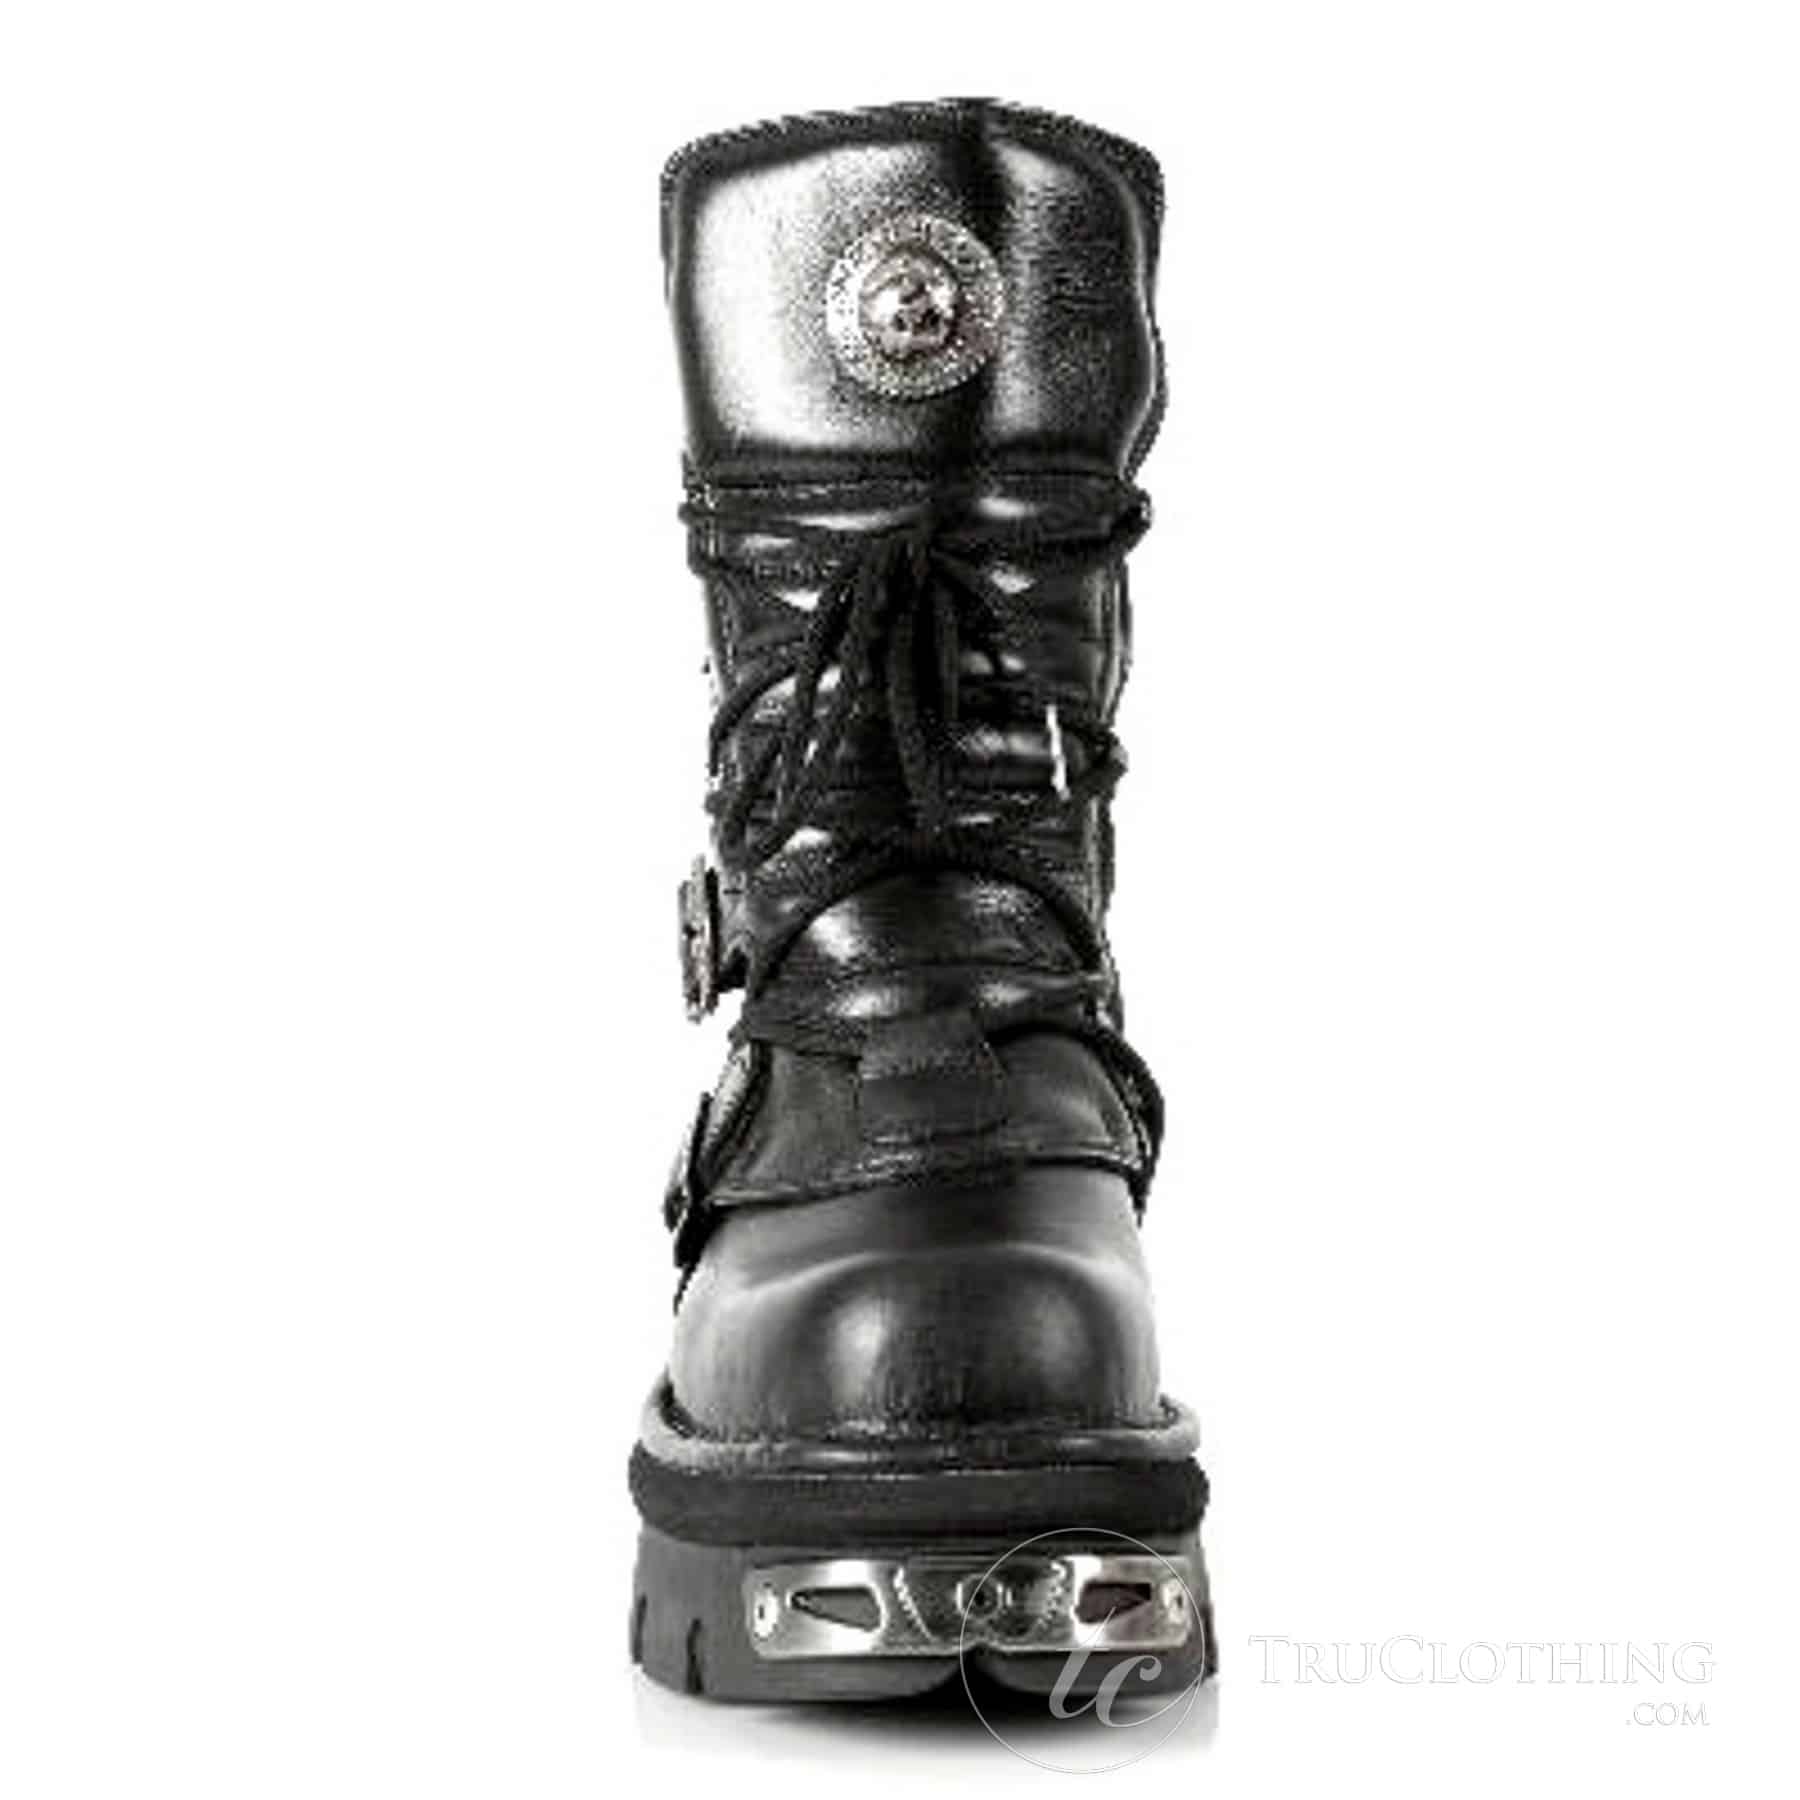 NEWROCK New Rock M.373-S4 Metallic Boots Black Leather Goth Biker Emo Fashion 